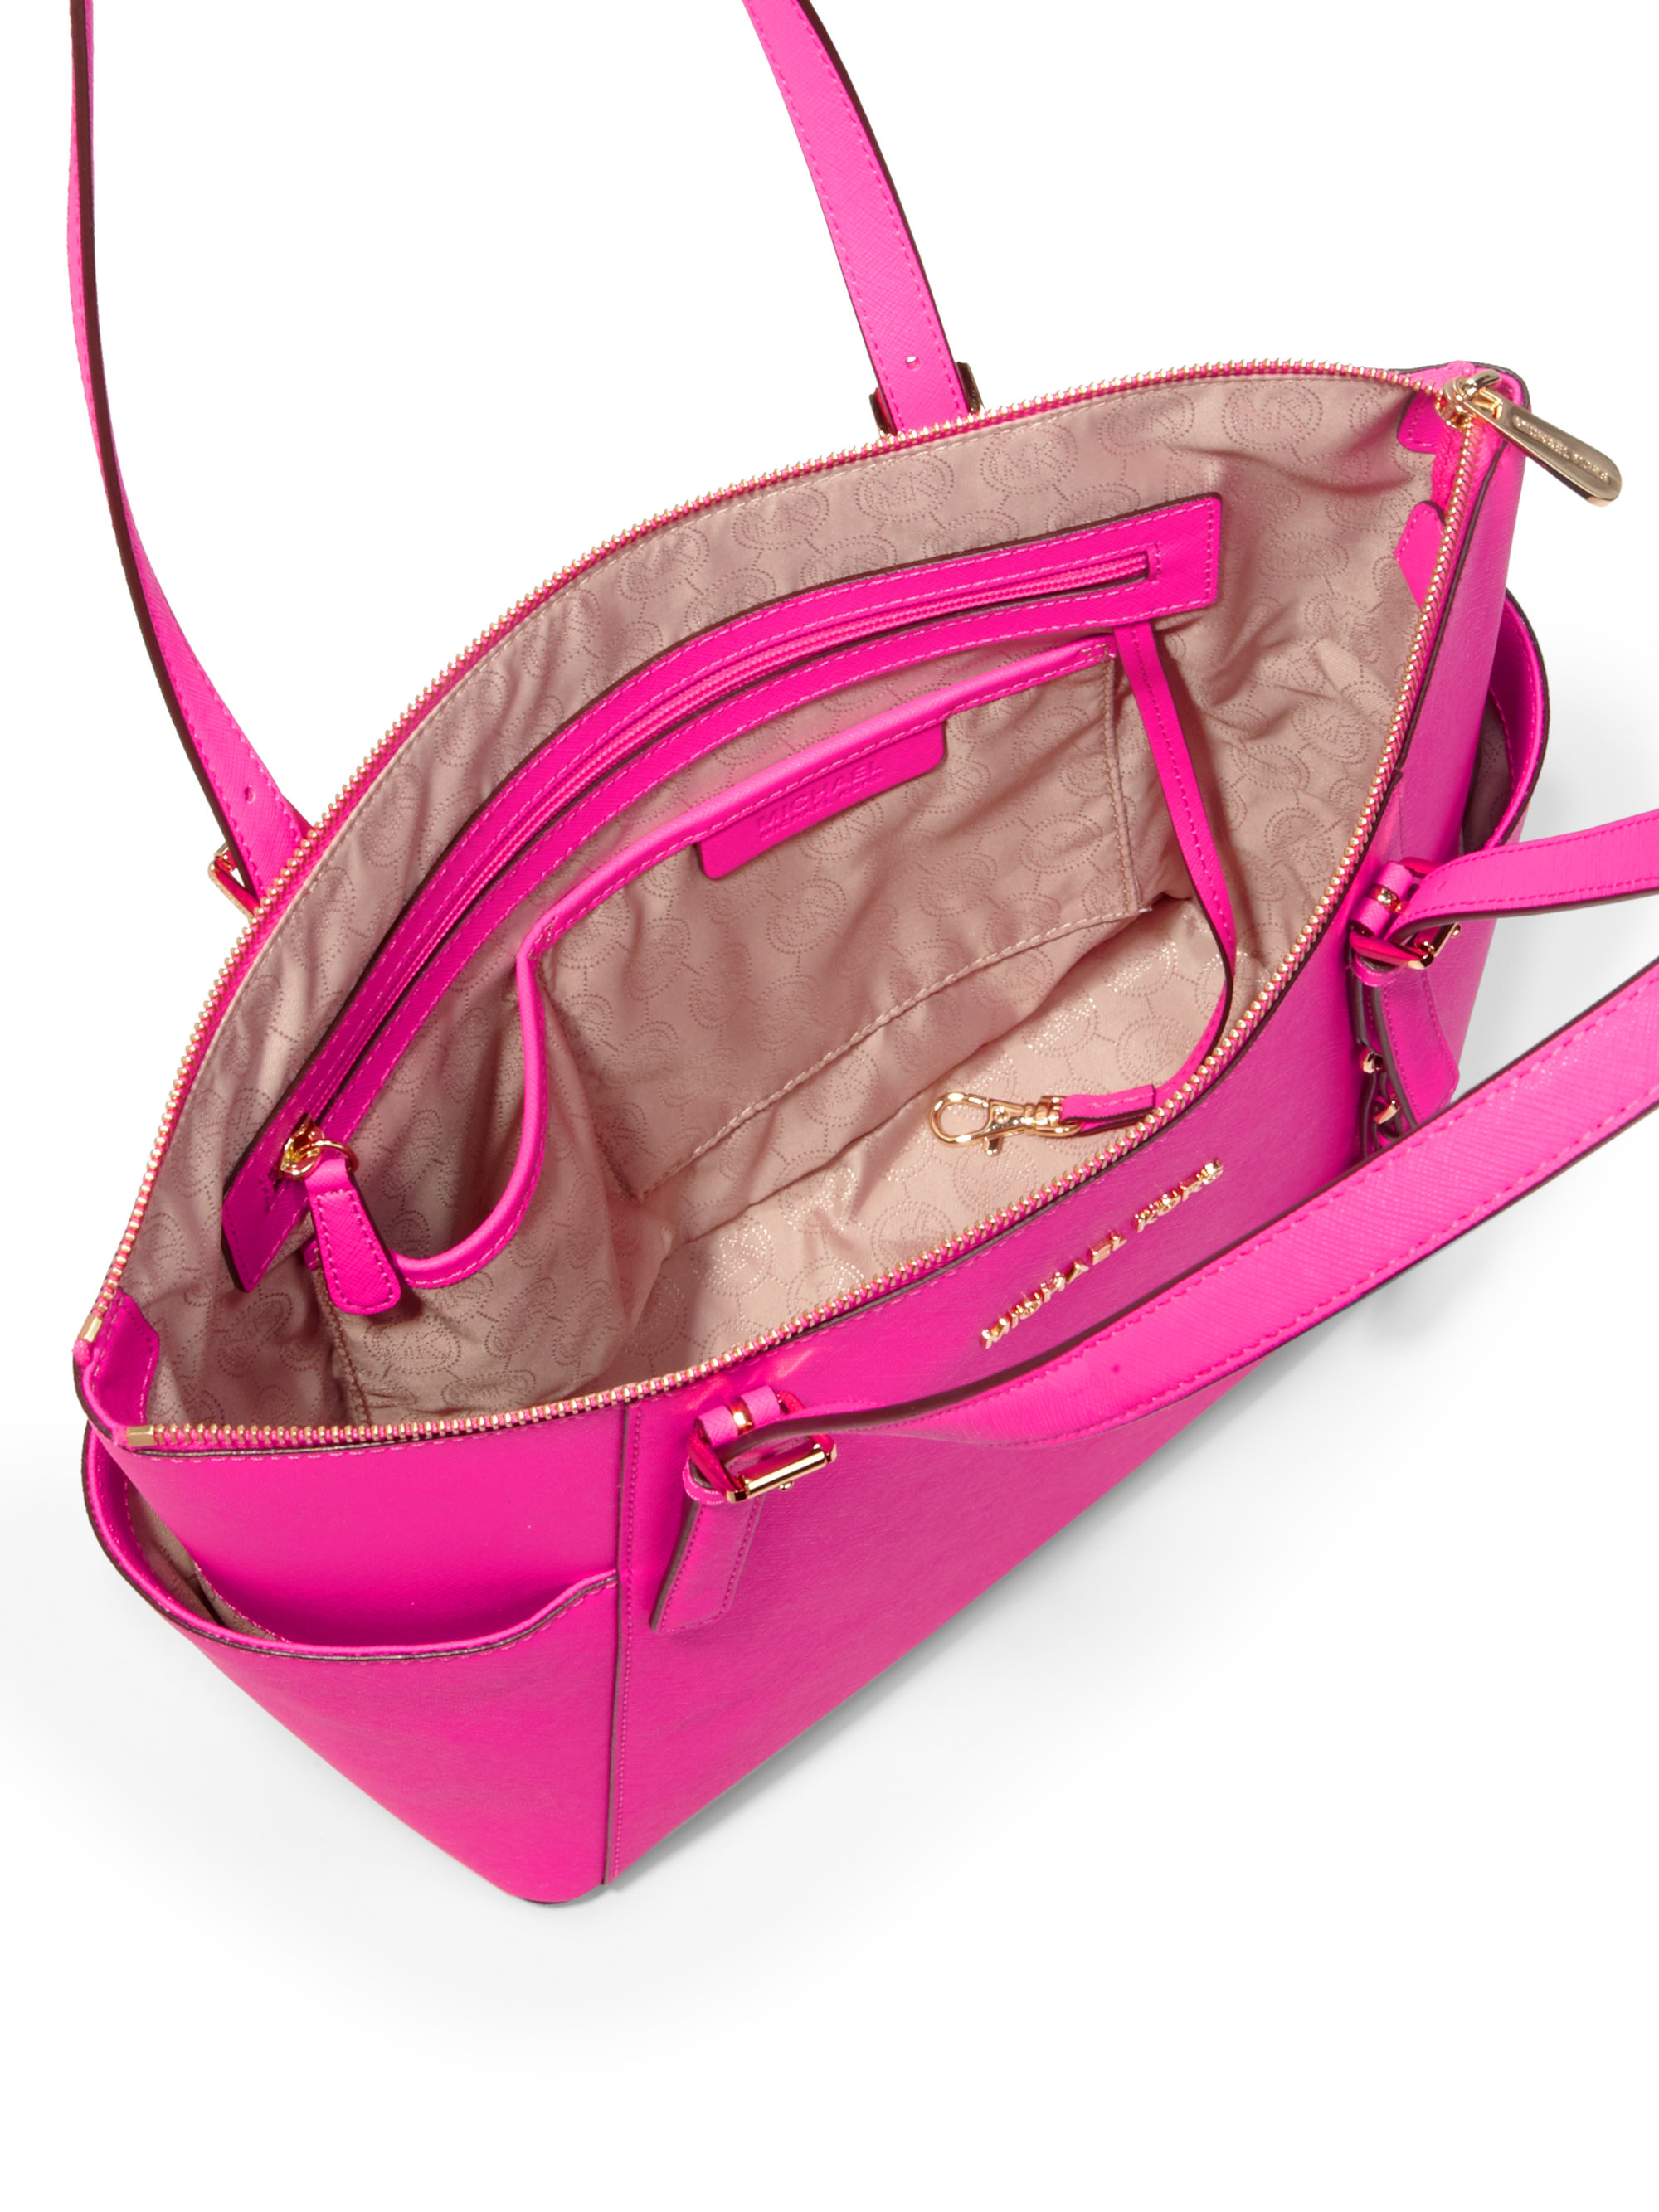 pijp overschot brand MICHAEL Michael Kors Eastwest Top Zip Saffiano Leather Tote Bag in Pink |  Lyst